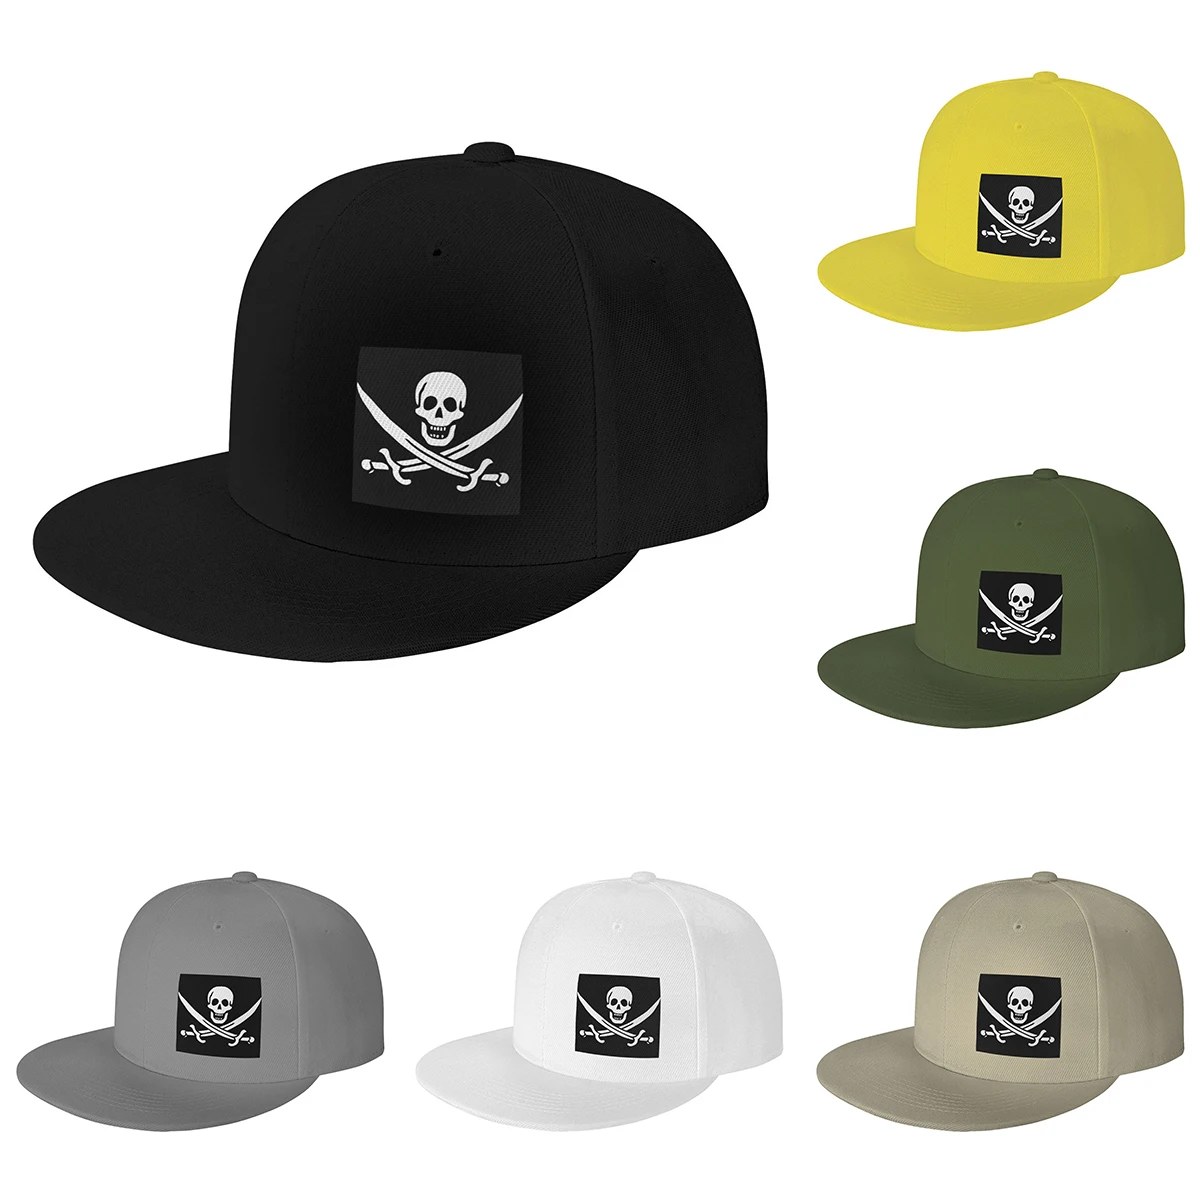 Personalized Men Women Hip Hop Hats Pirate Skull Adjustable Flat Hats Outdoor Sun Hat Fashion Baseball Cap